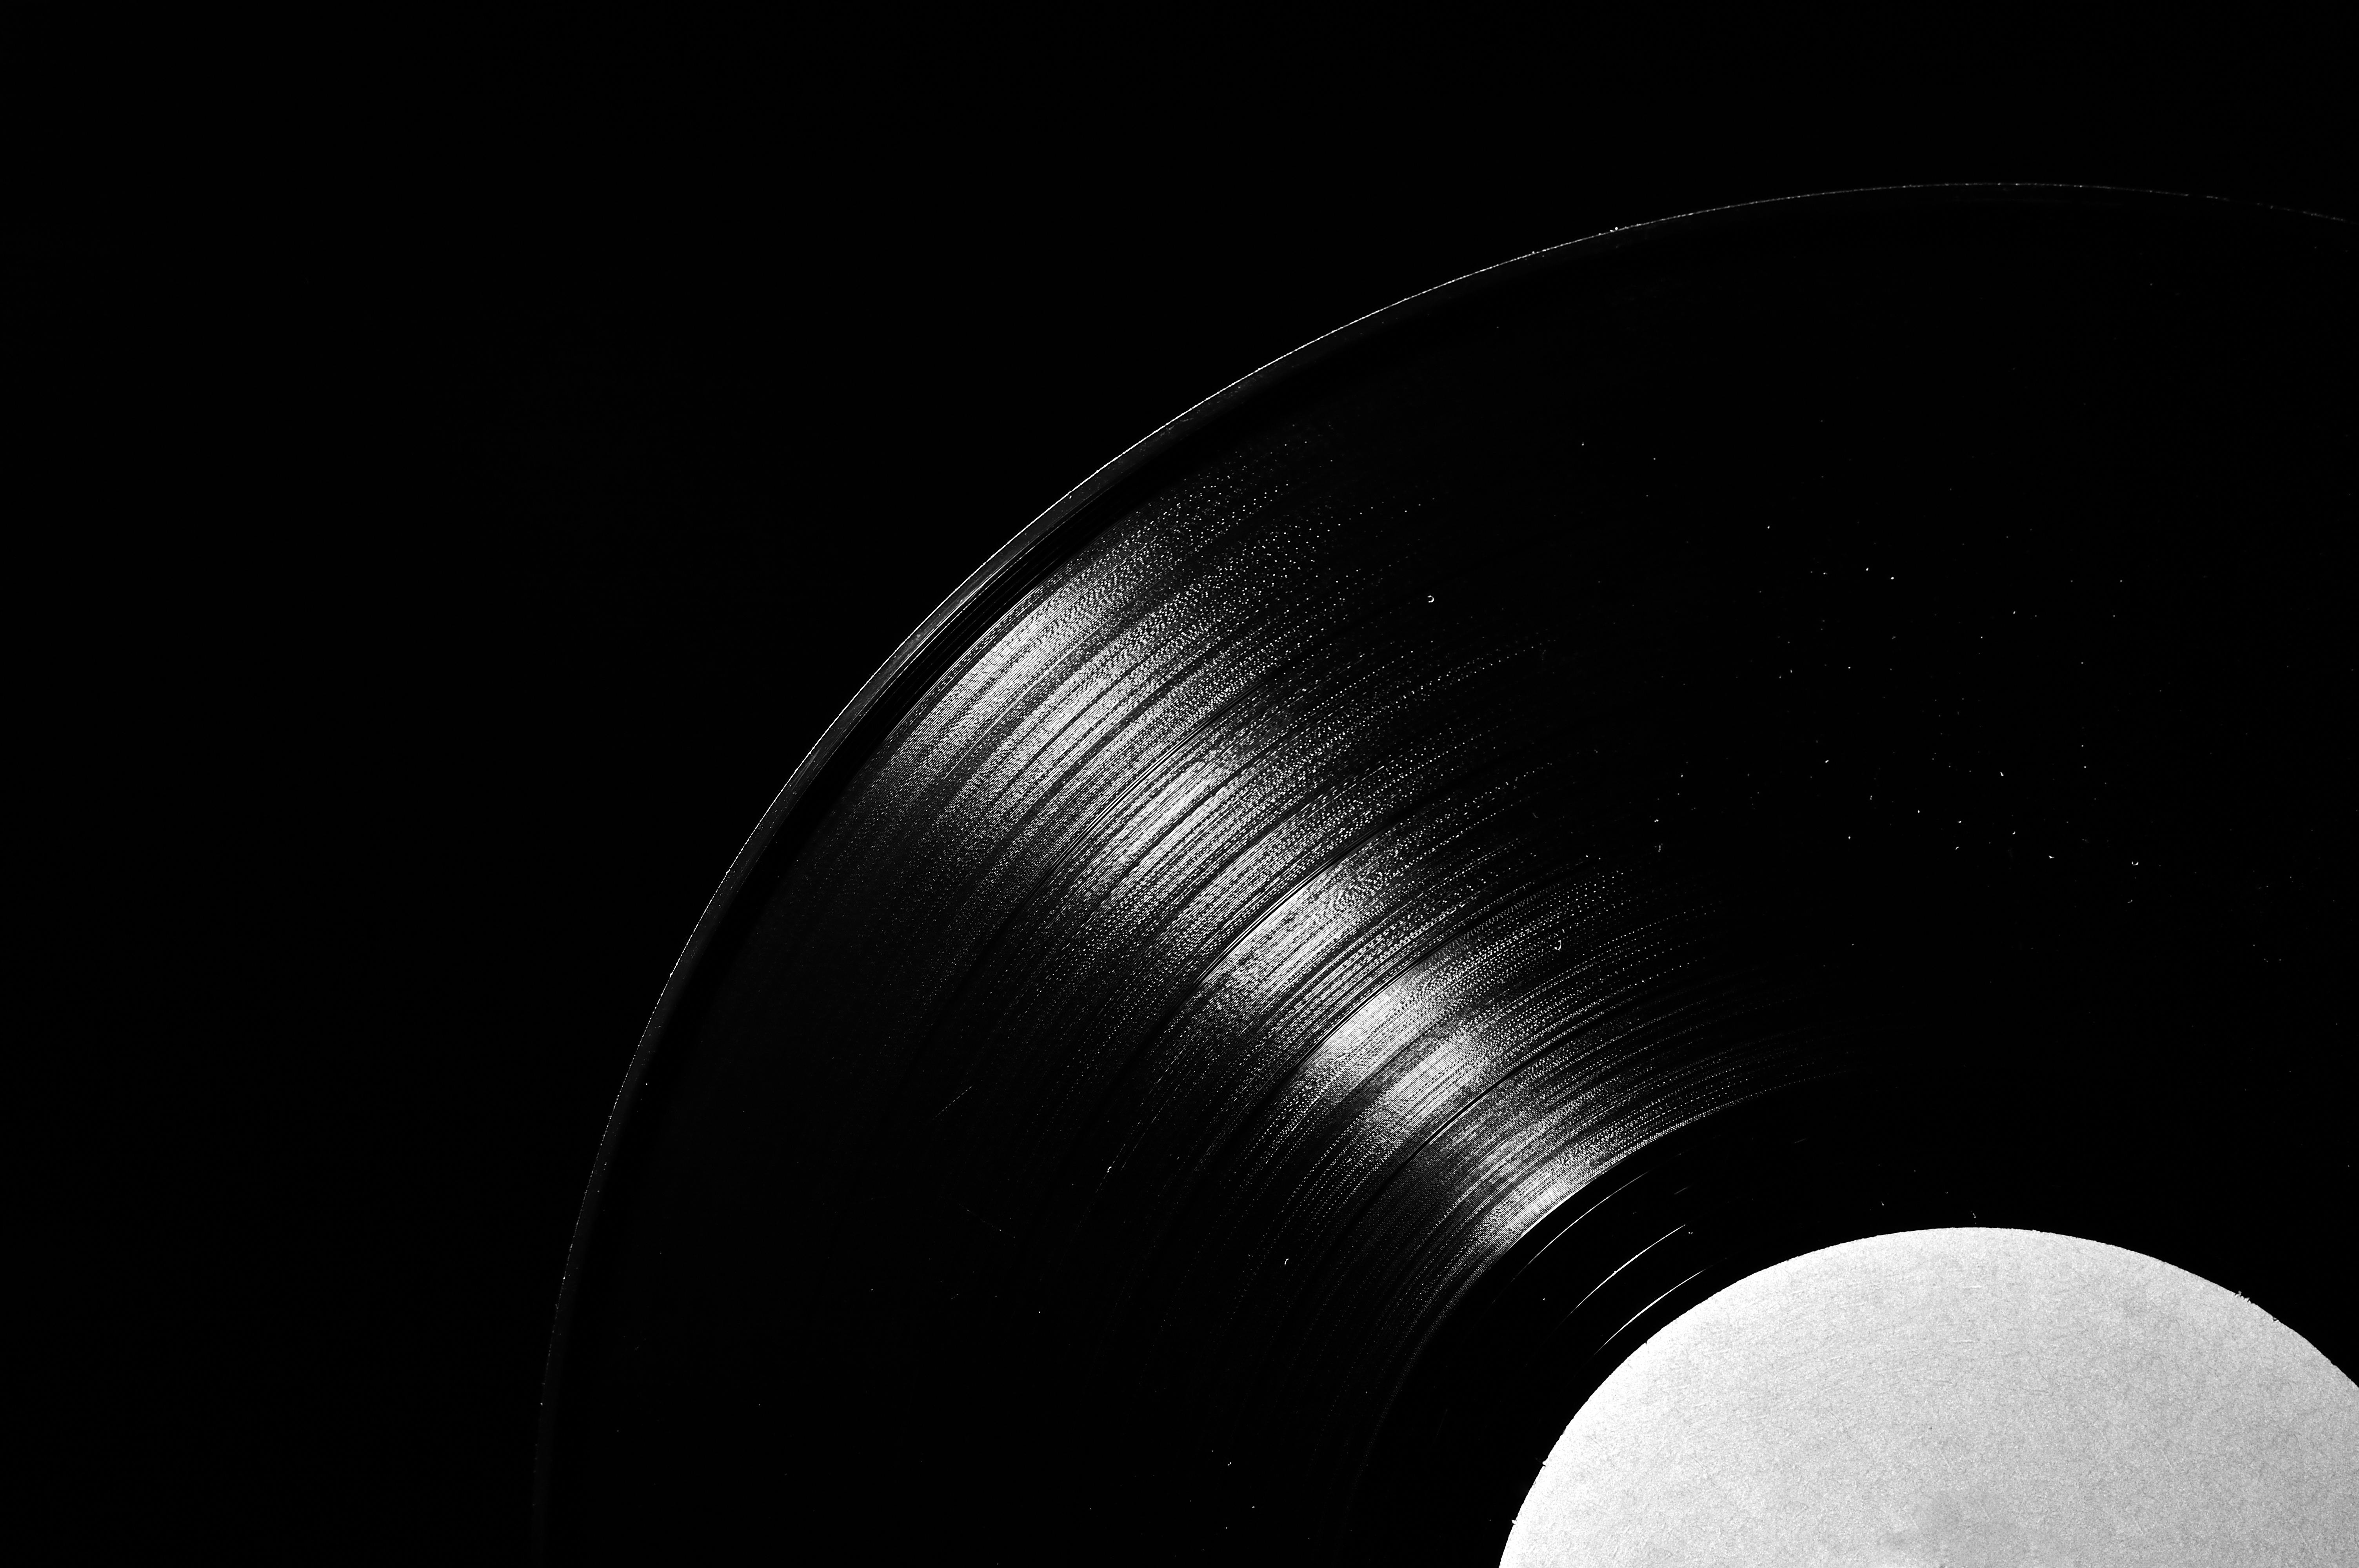 Black vinyl record on vinyl record photo – Free Grey Image on Unsplash